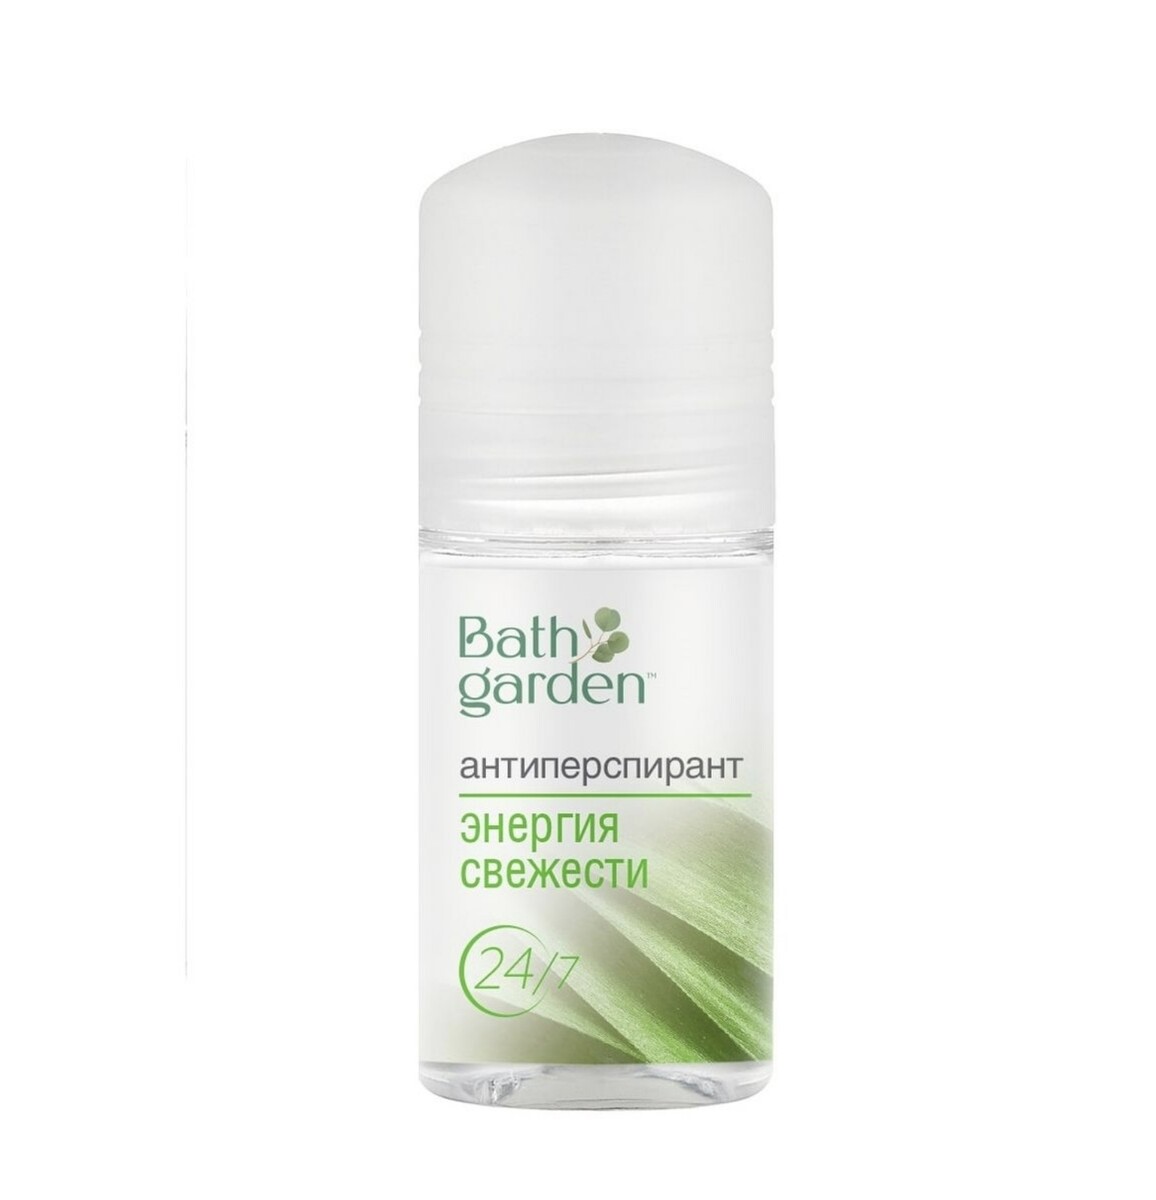 Bath garden дезодорант-антиперспирант энергия свежести, 50мл виши дезодорант clinical control дезодорант антиперспирант 96 ч 50 мл